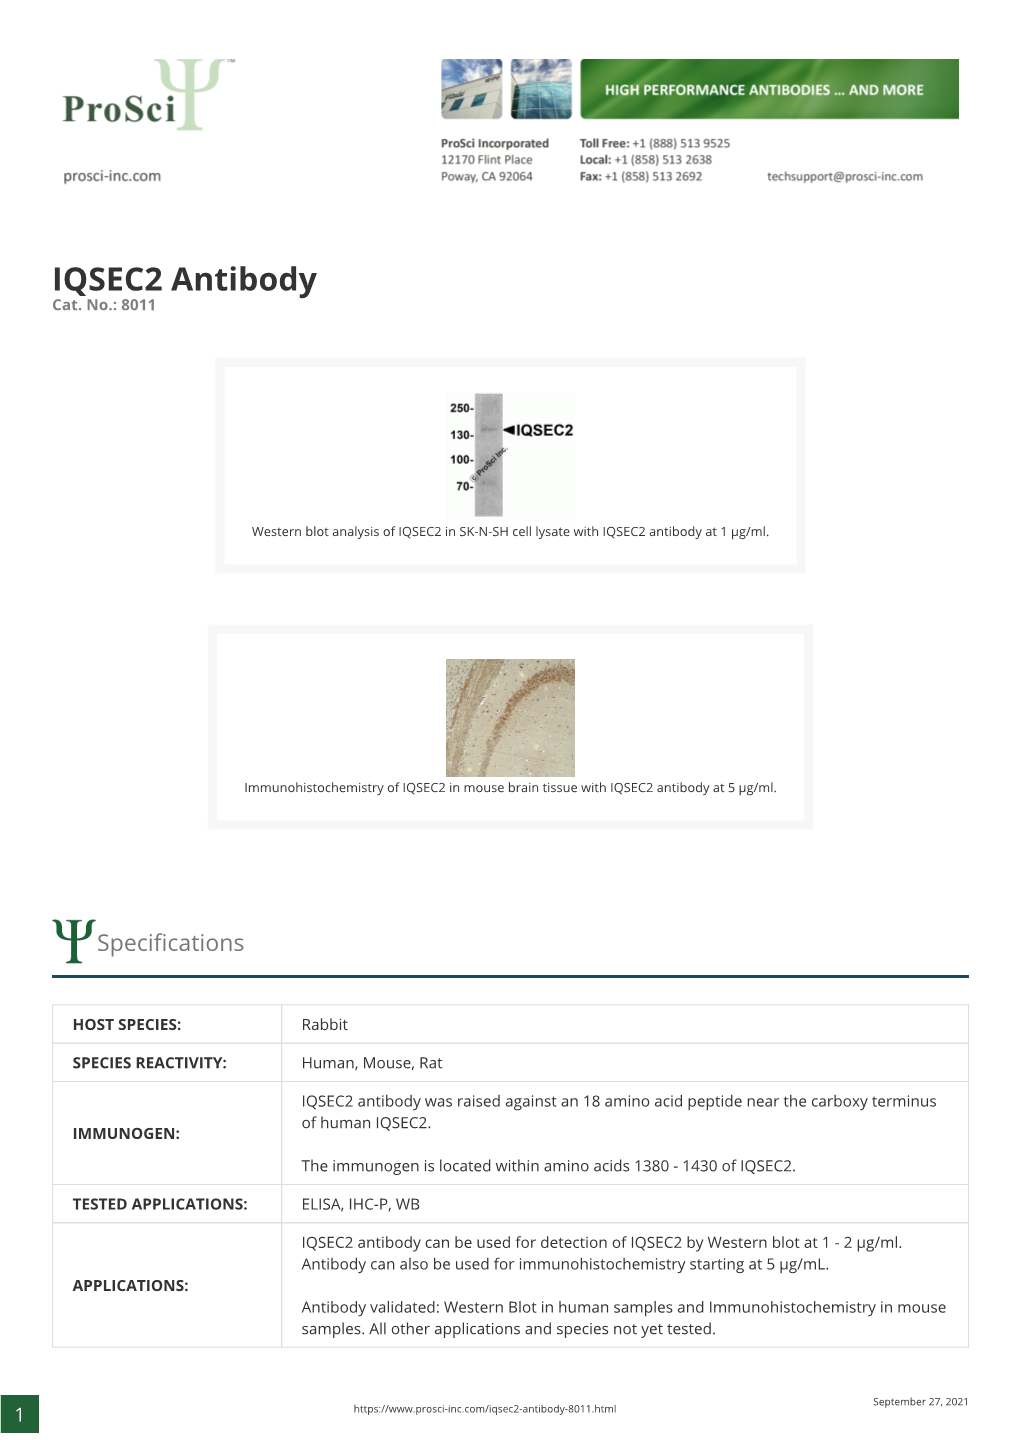 IQSEC2 Antibody Cat